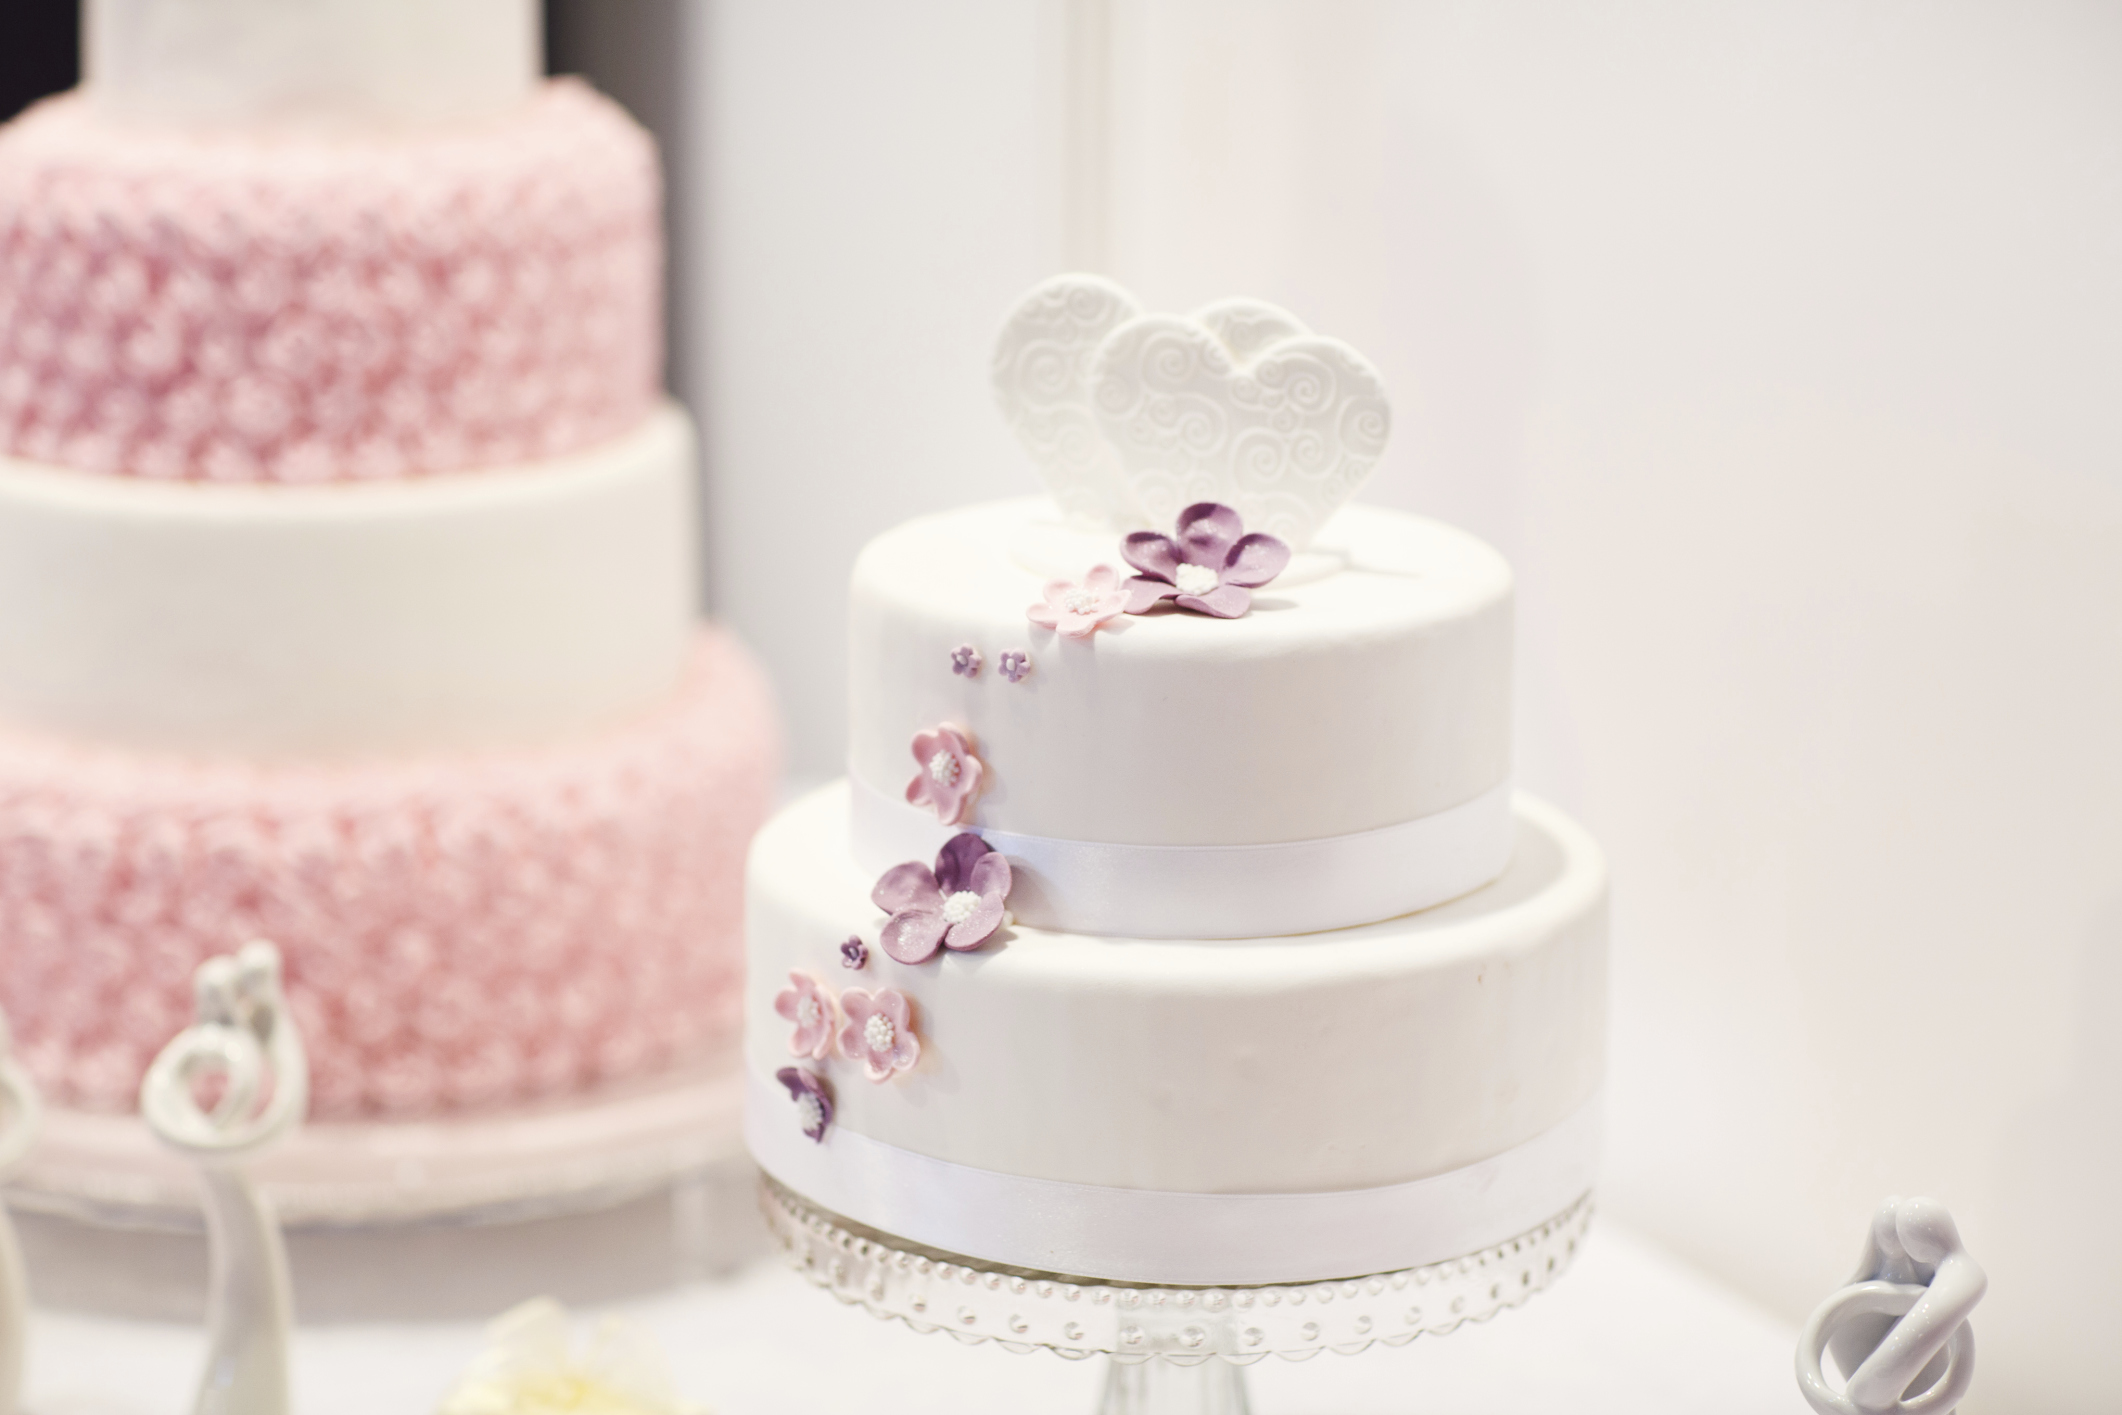 Simple budget wedding cake ideas | Easy Weddings